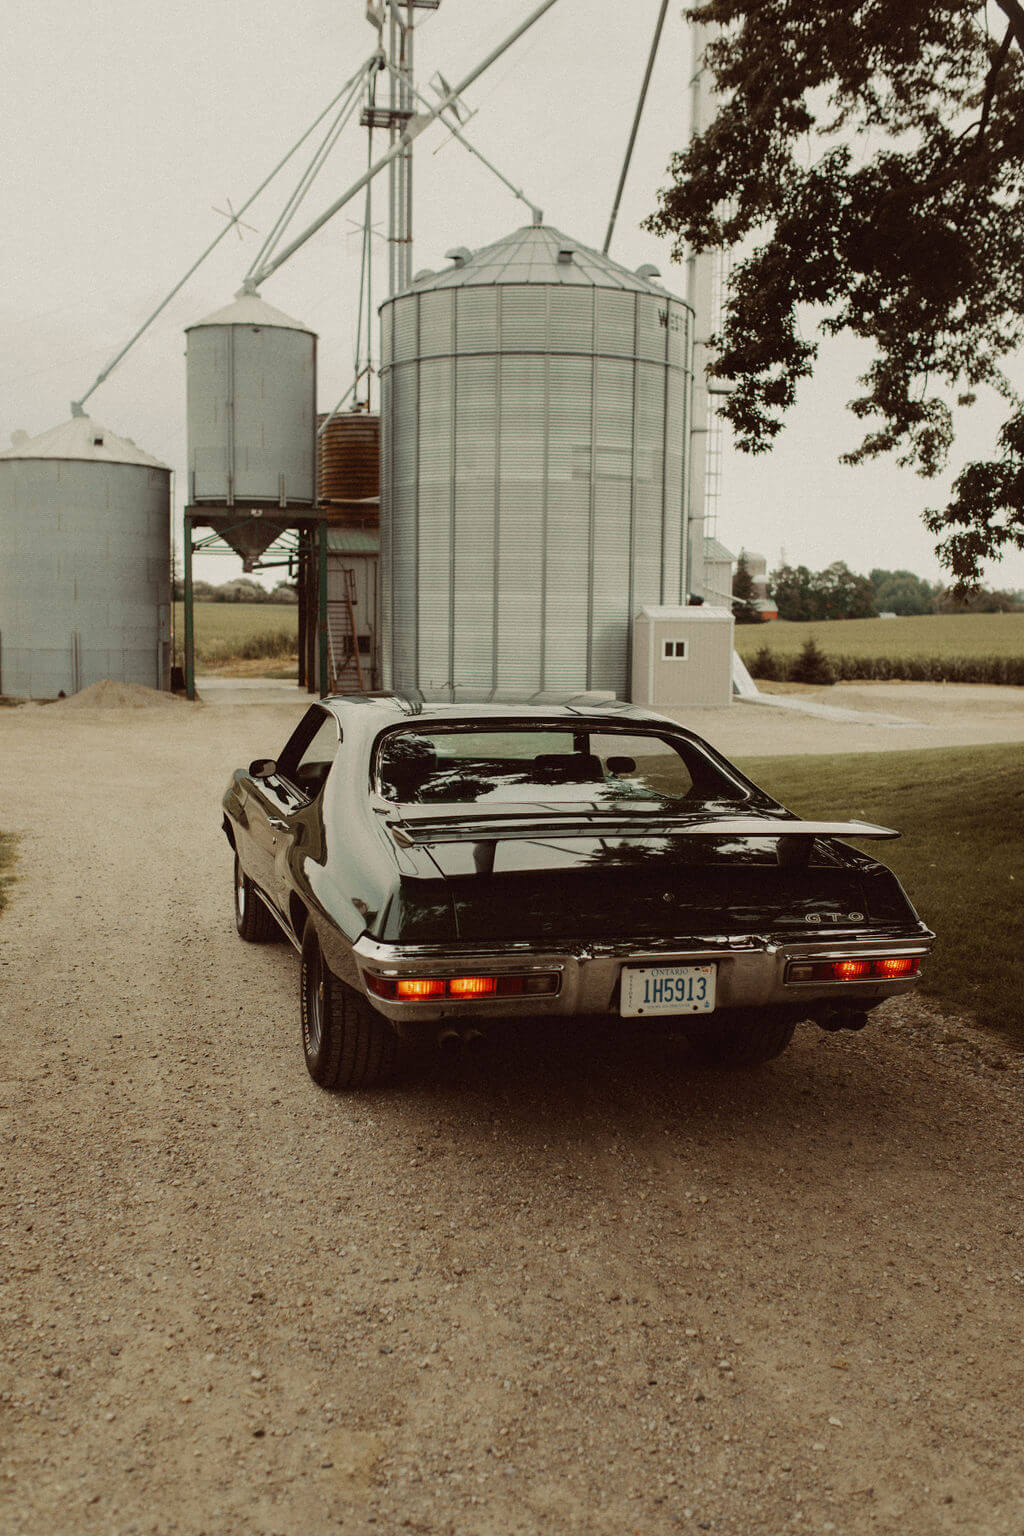 Classic car at farm wedding venue